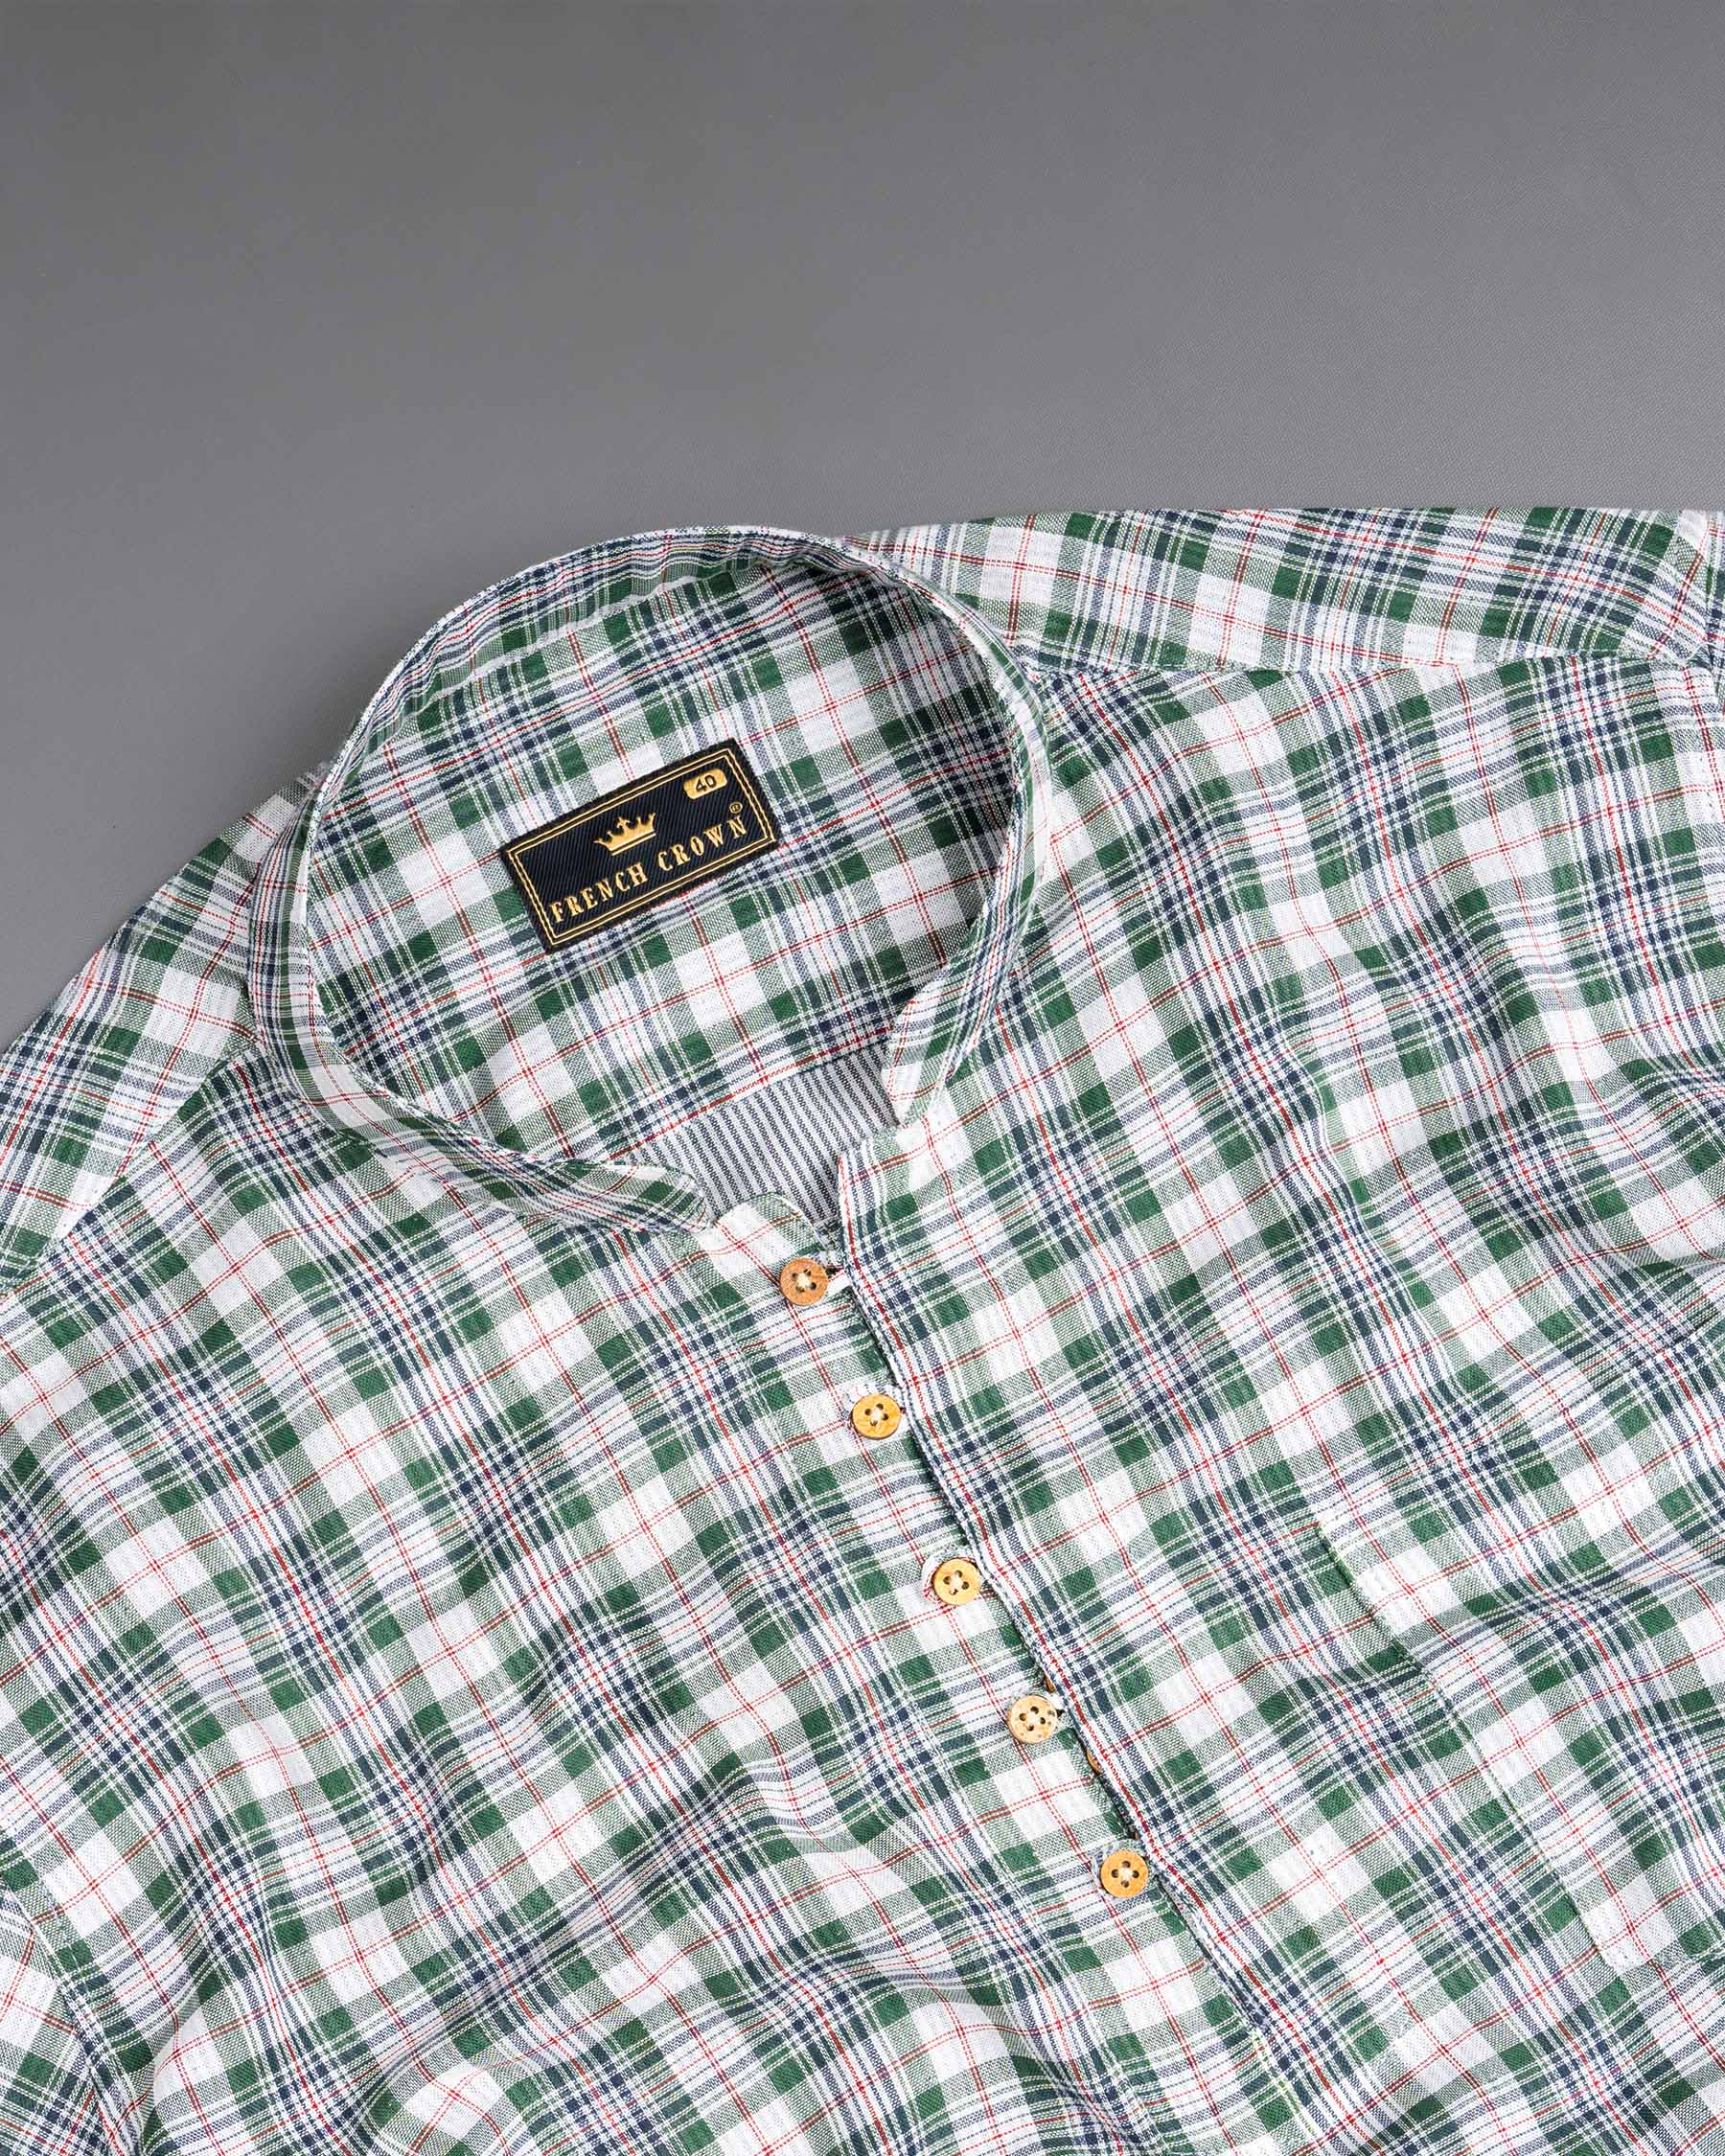 off White and Stromboli Green Plaid Twill Textured Premium Cotton Kurta Shirt